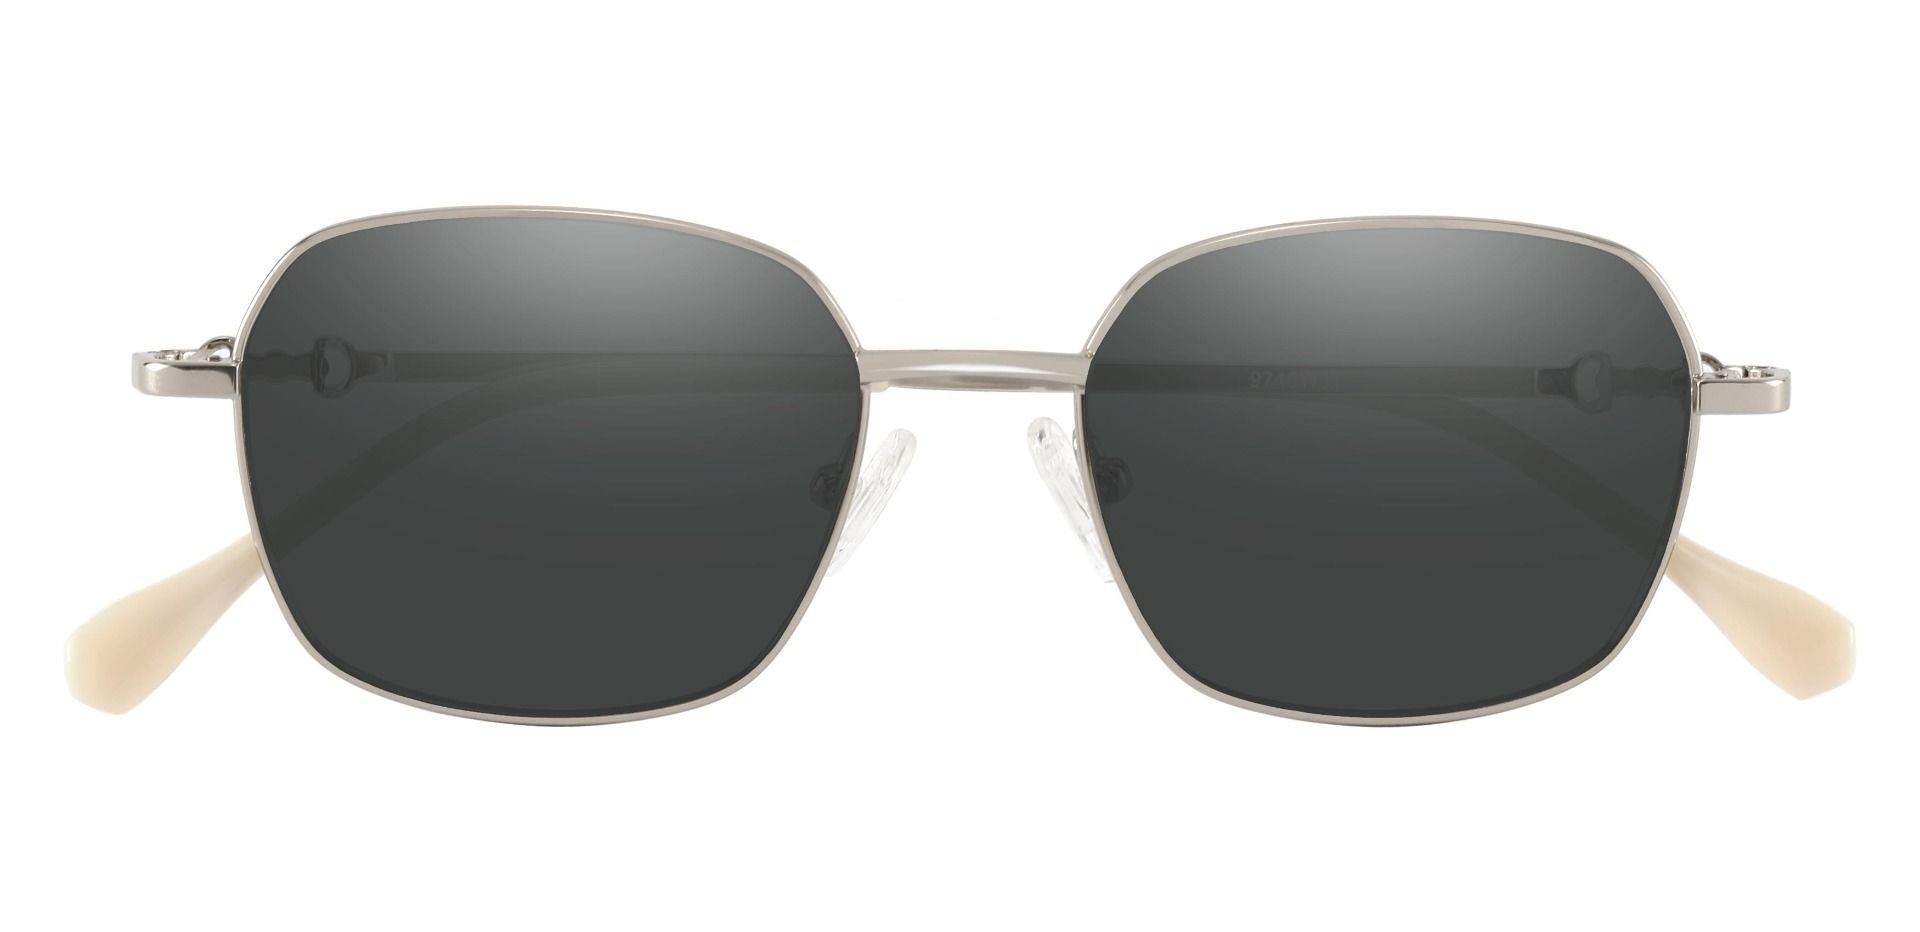 Averill Geometric Prescription Sunglasses - Silver Frame With Gray Lenses